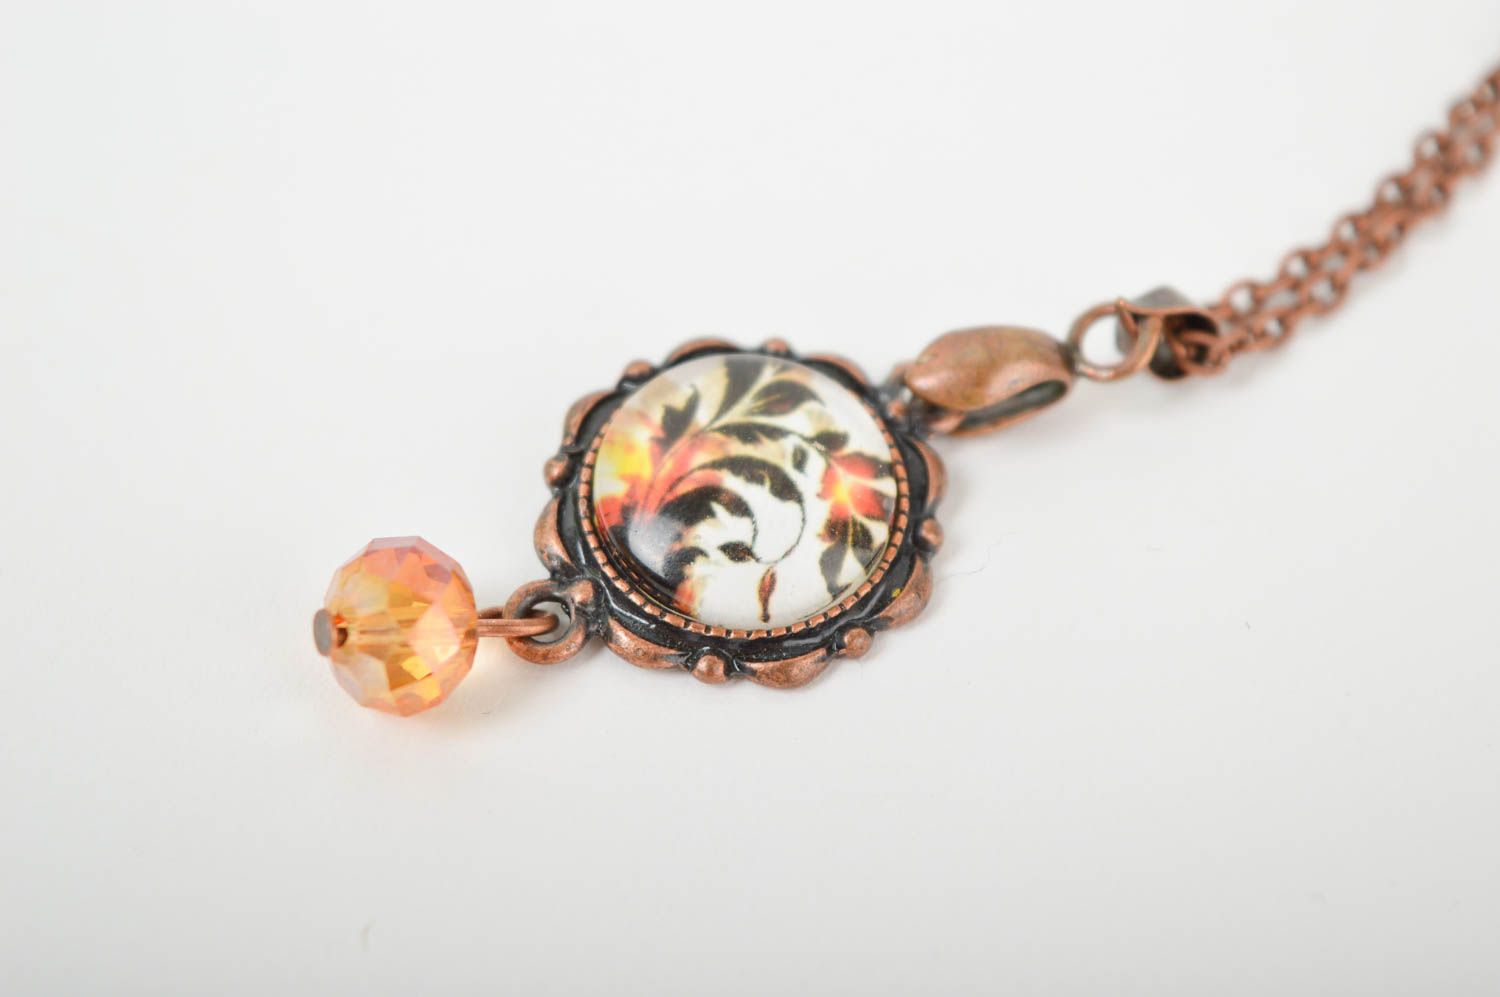 Small handmade beaded pendant metal pendant on chain artisan jewelry designs photo 3